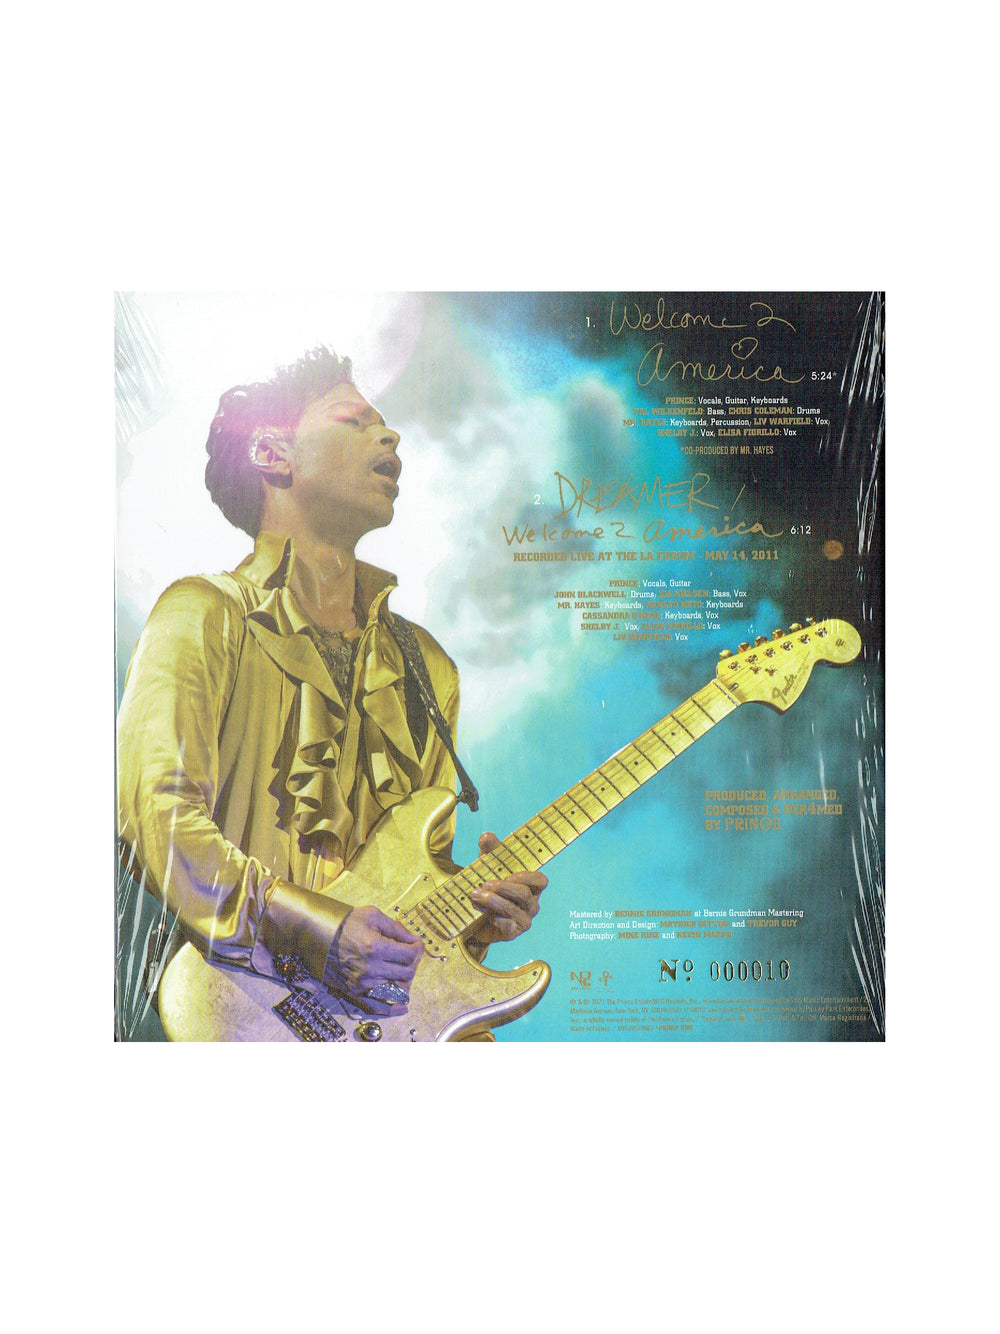 Prince – WELCOME 2 AMERICA (7" SINGLE) GOLD VINYL LTD ED NUMBER 000010